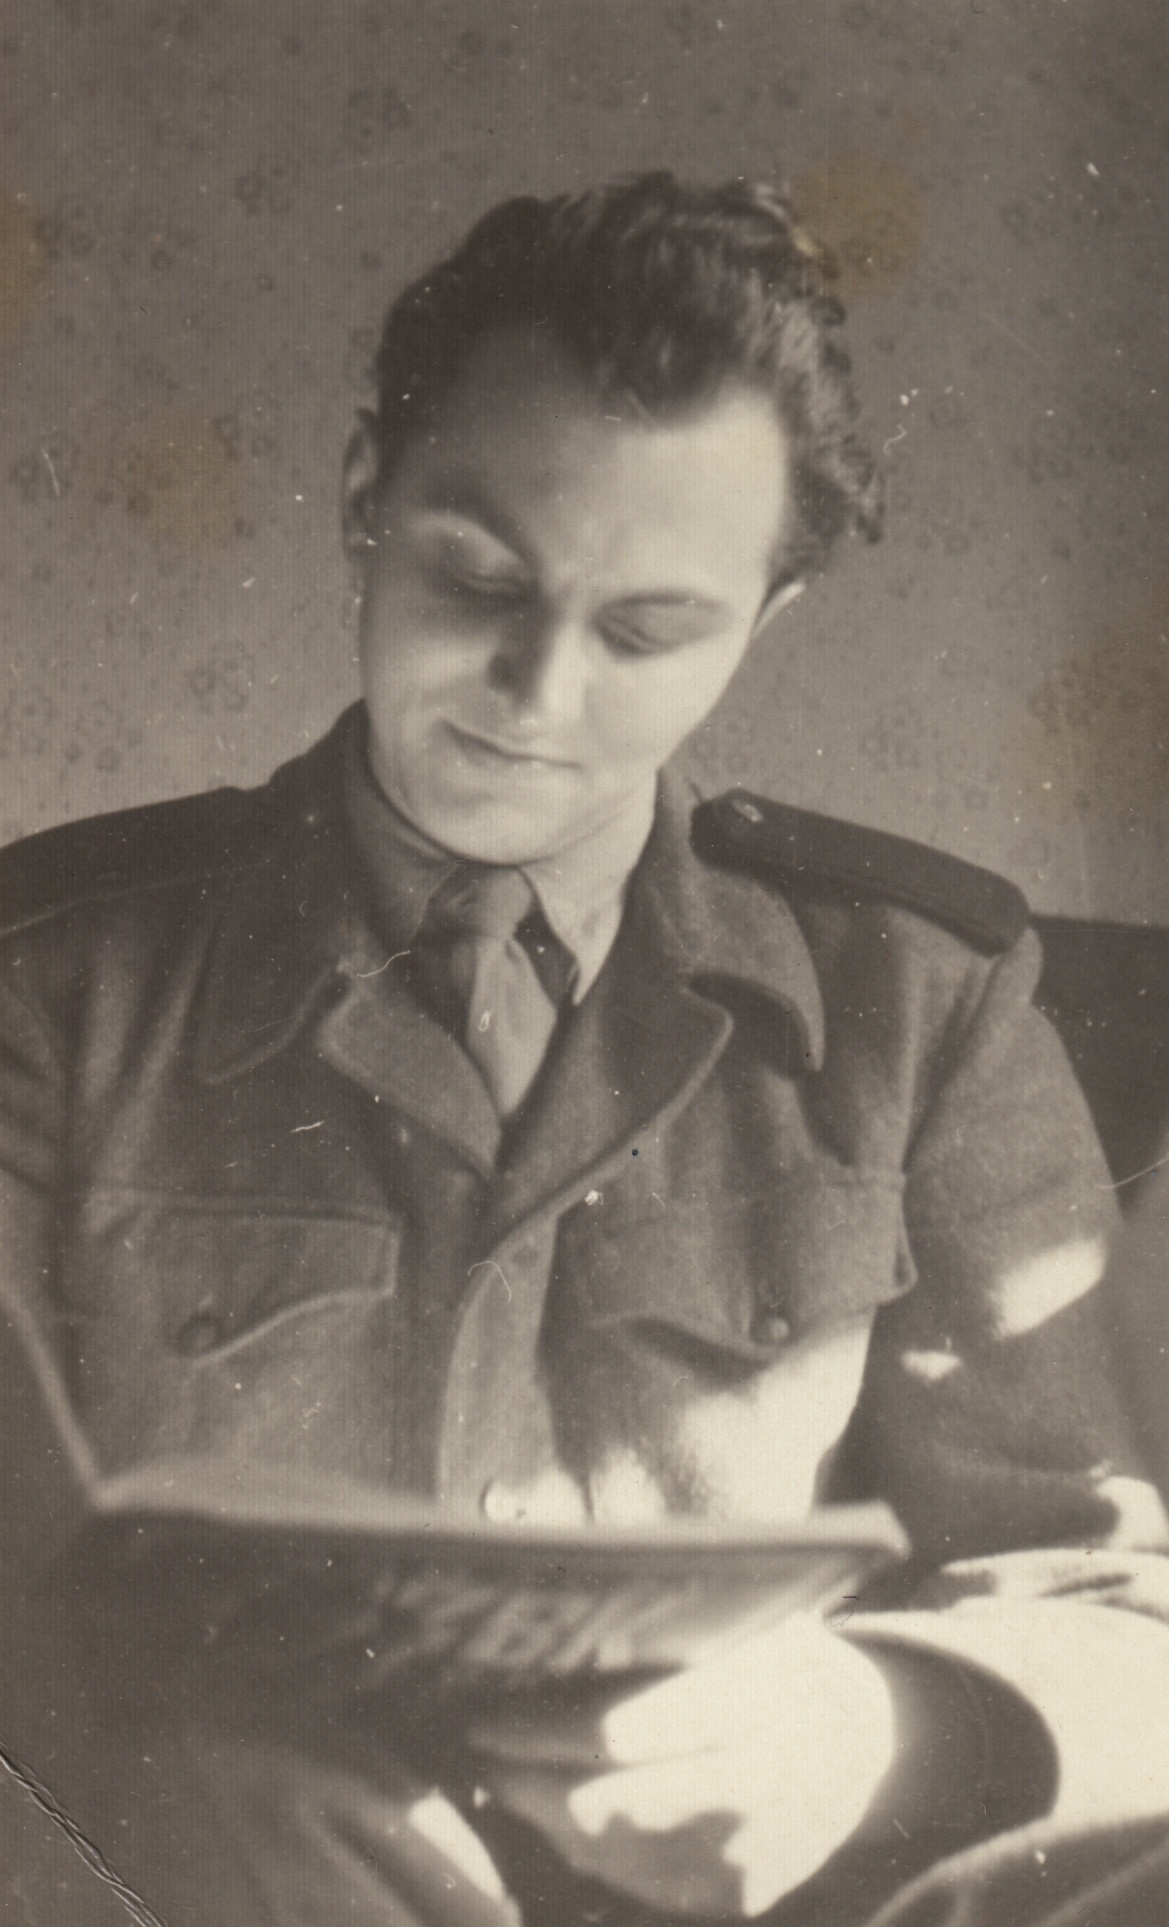 Jiří Pešek in the uniform of the Auxiliary Engineering Corps (1954)